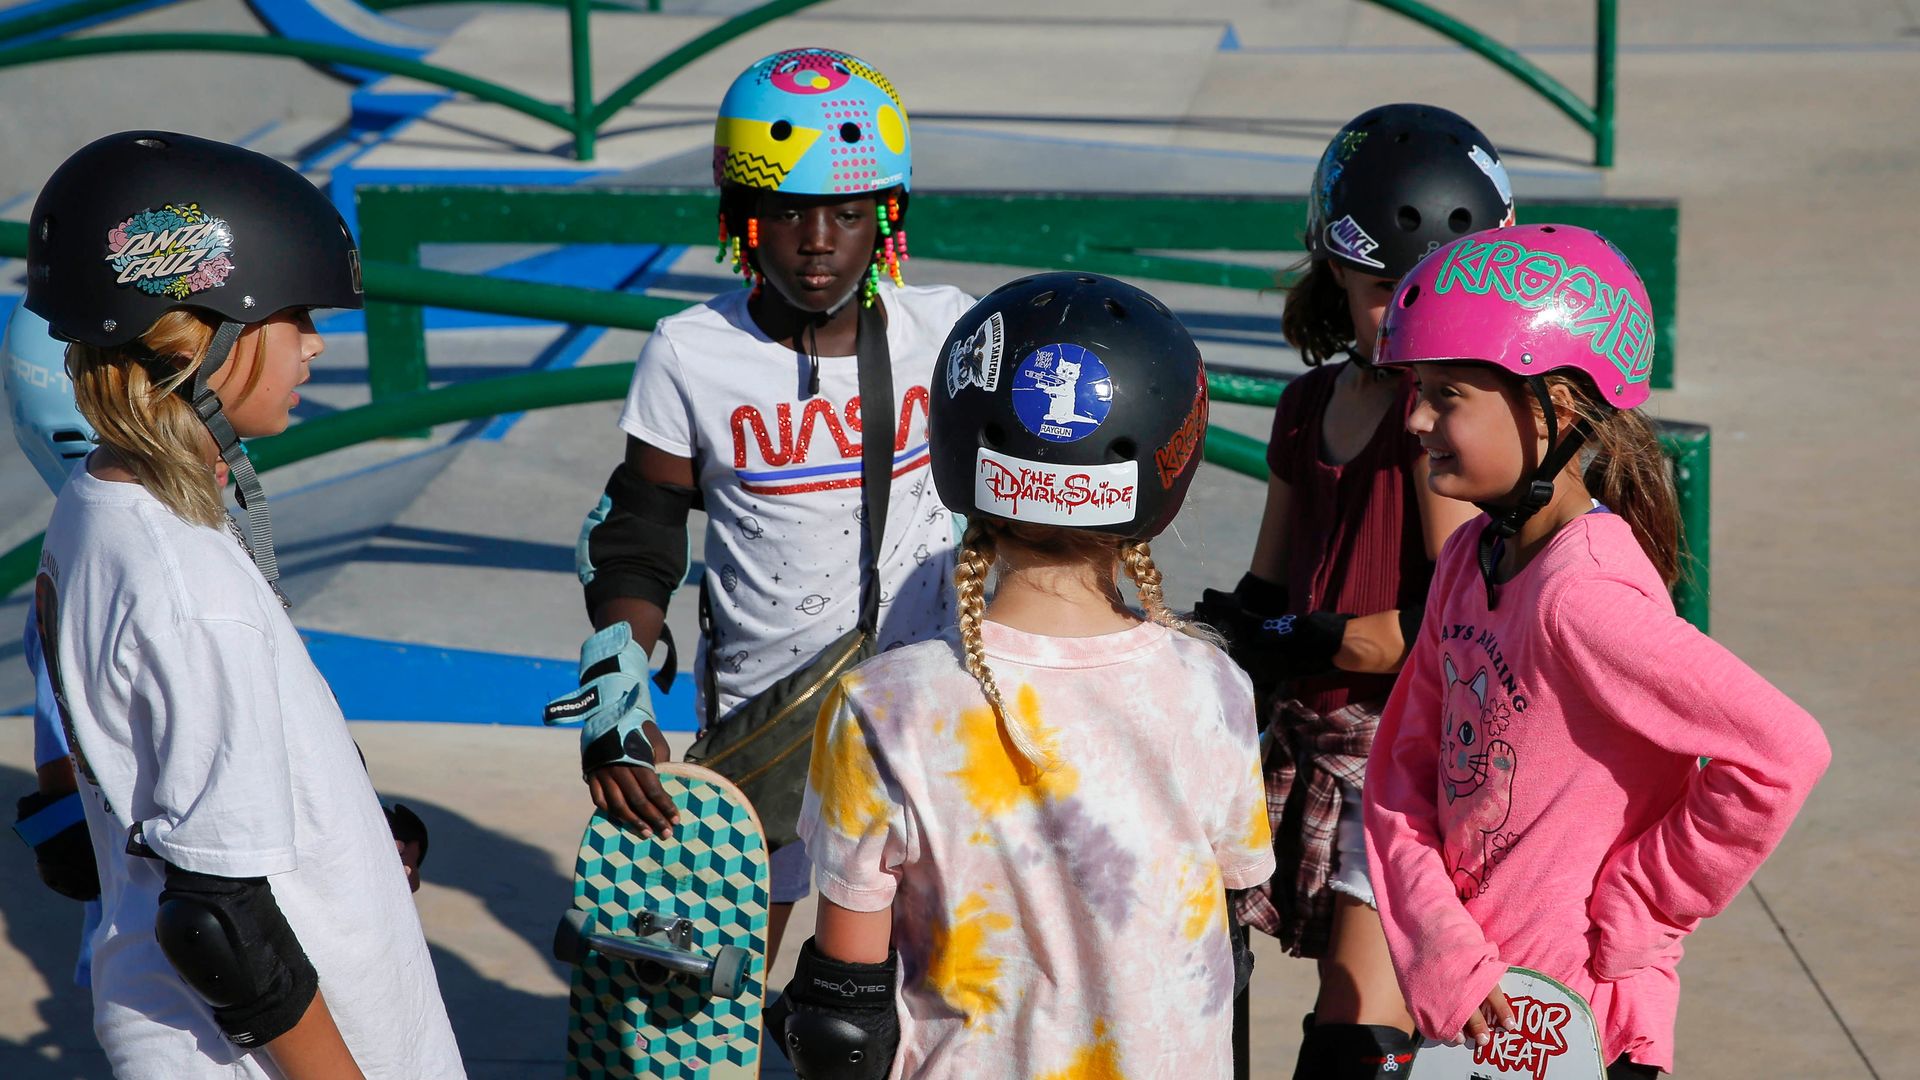 Kids at the Lauridsen skatepark